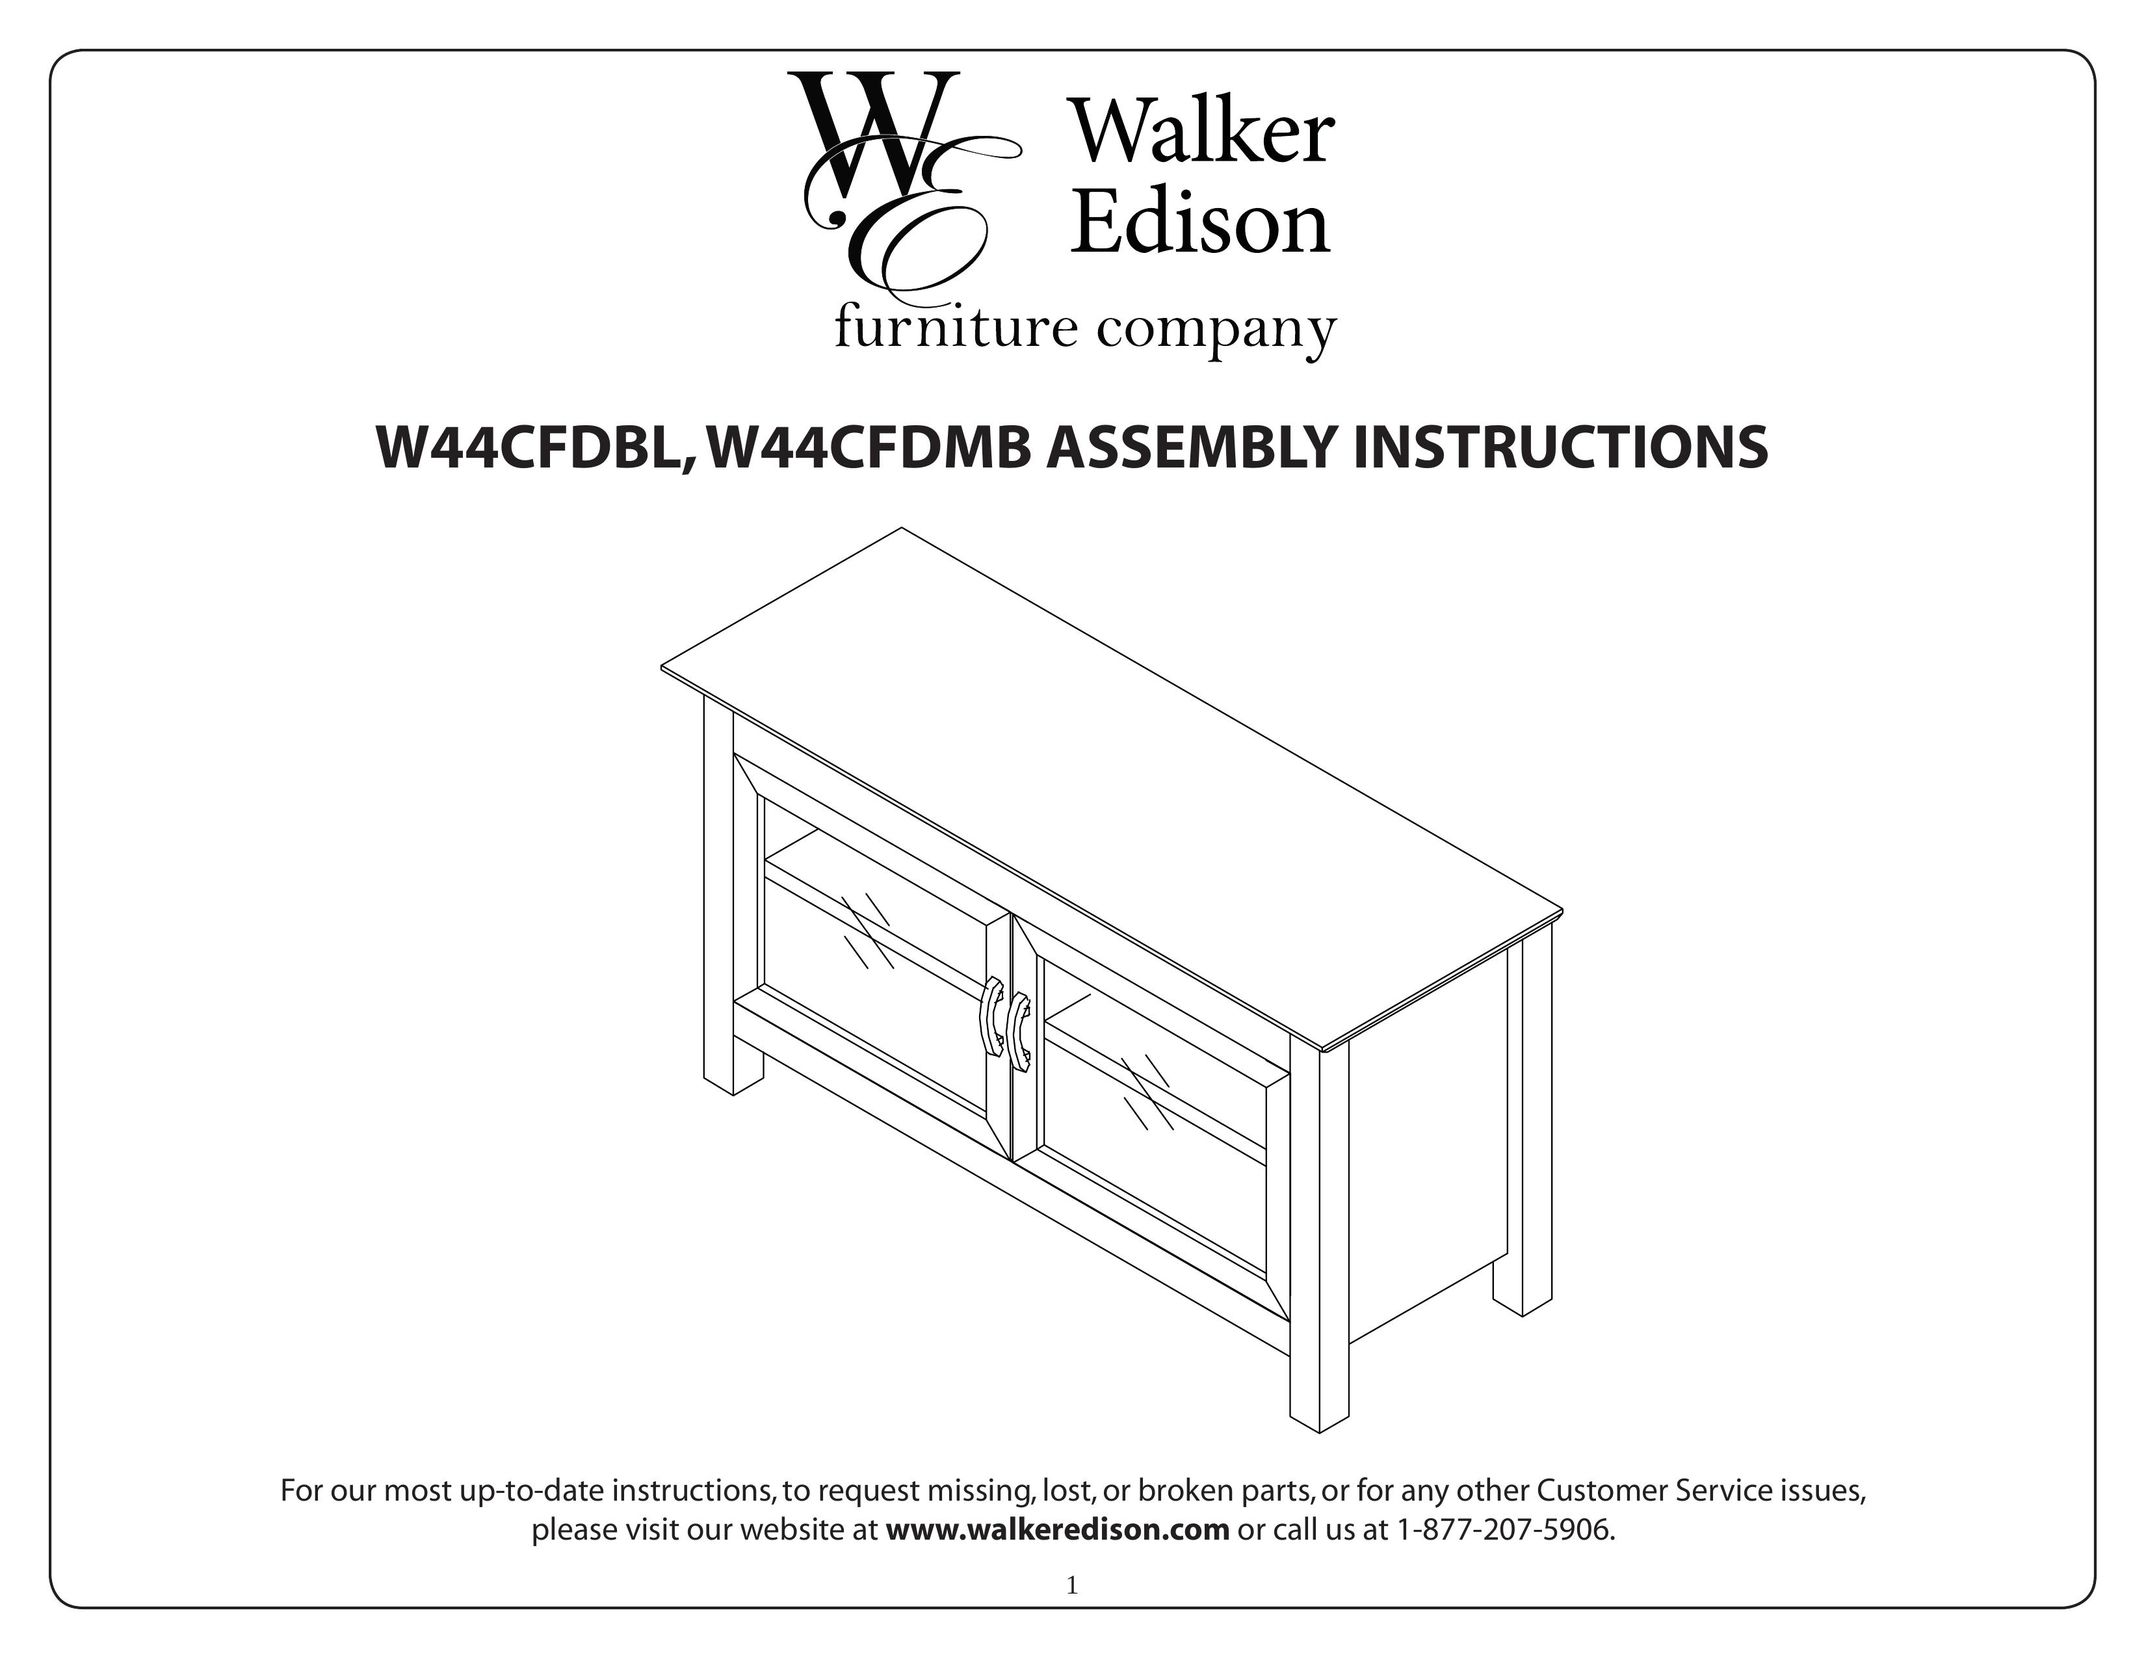 Walker W44CFDBL Indoor Furnishings User Manual